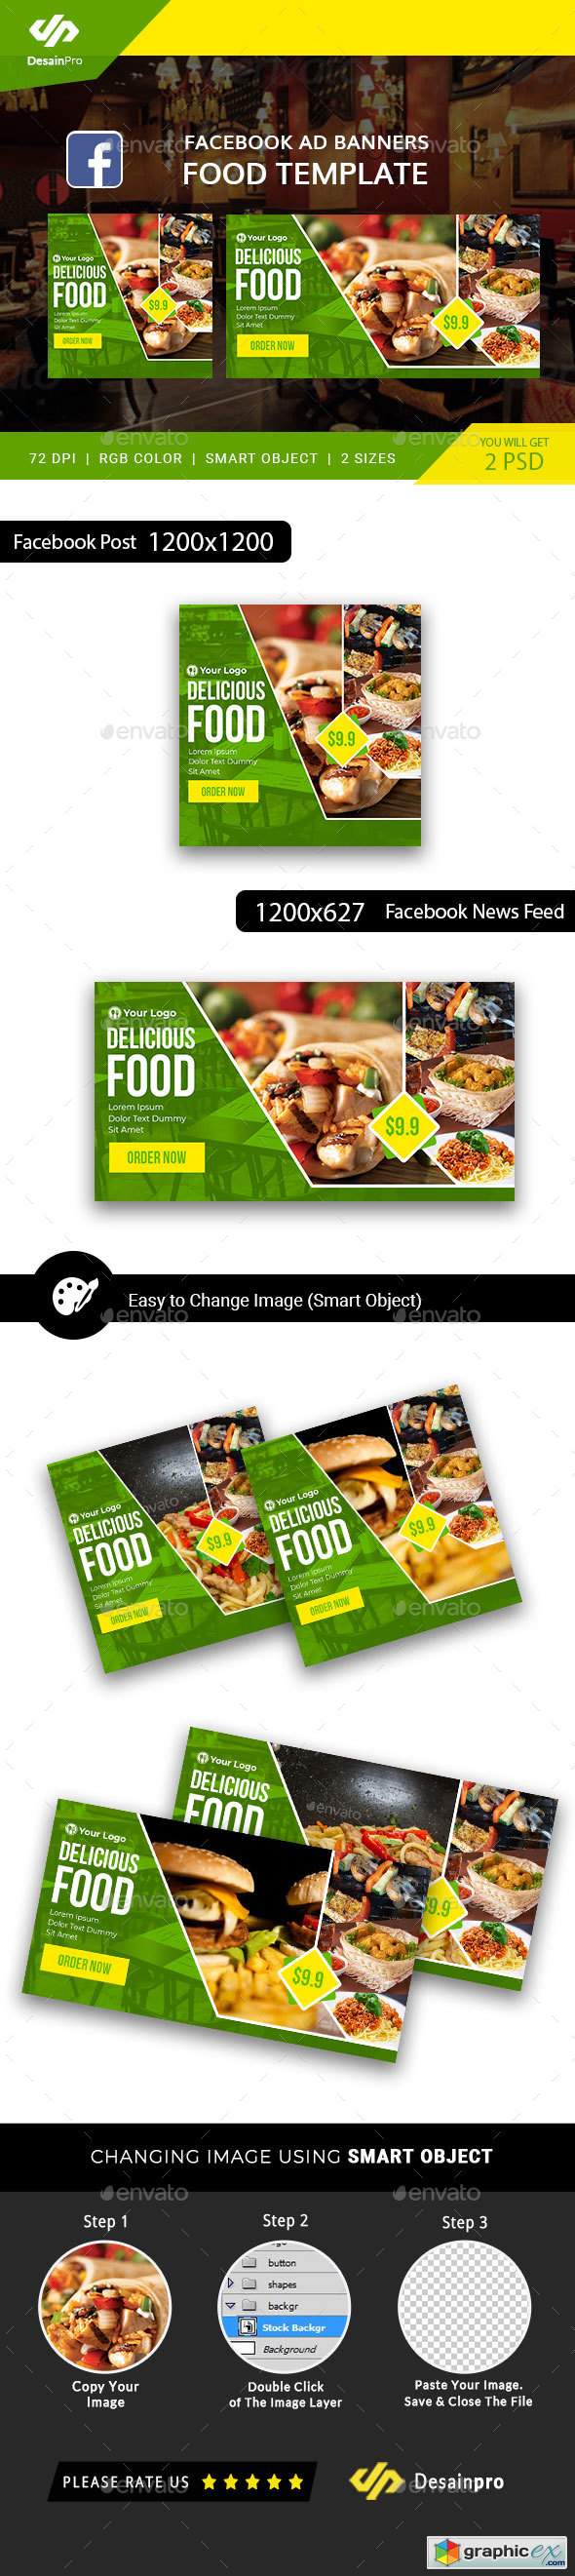 Food Business FB Ad Banner - AR